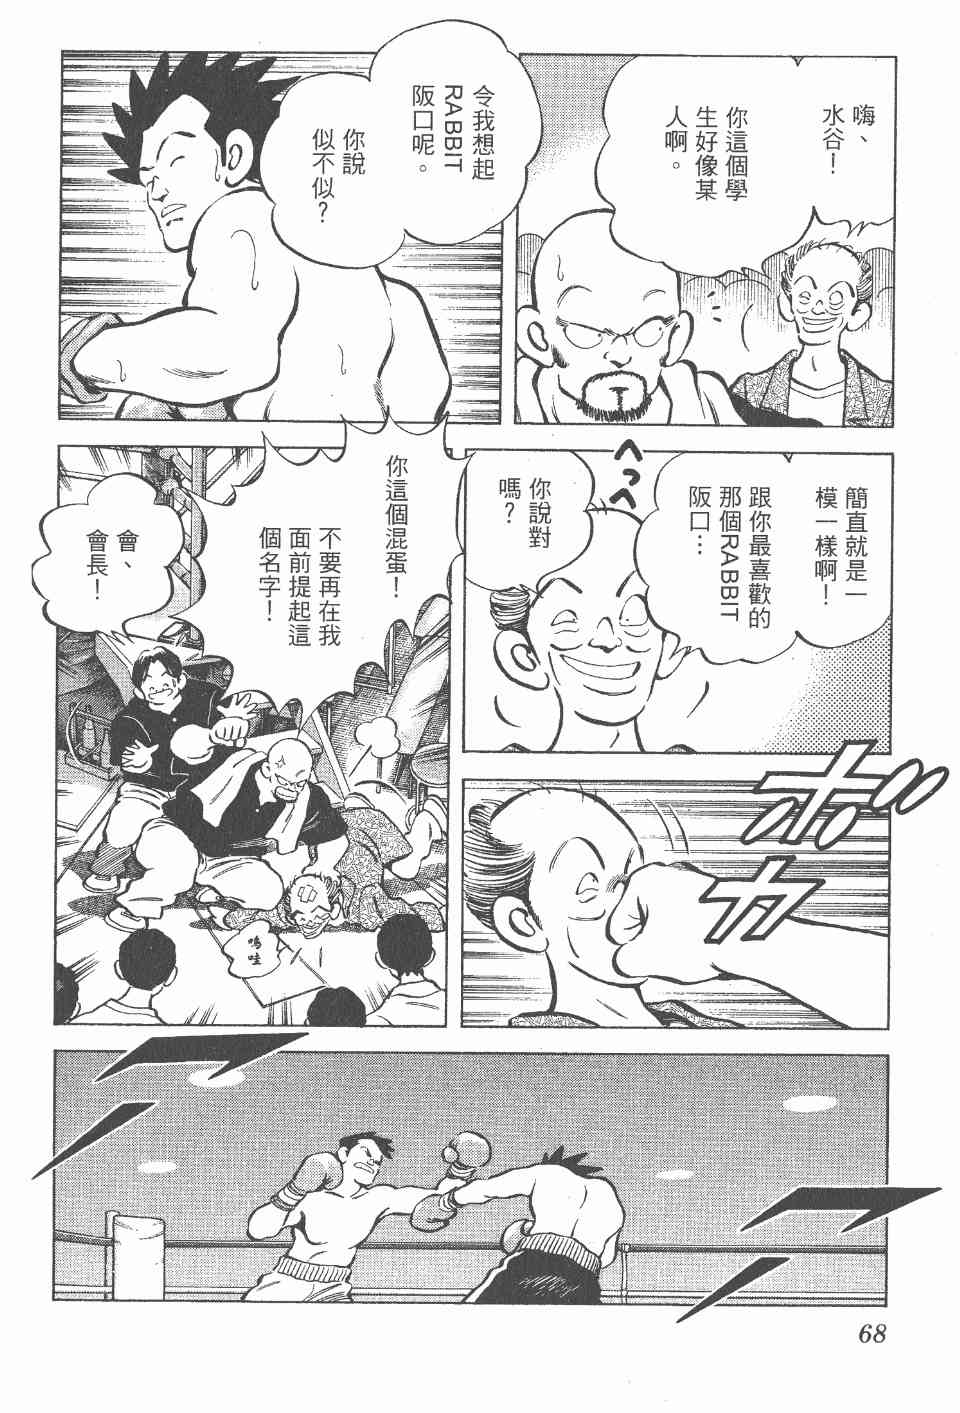 《Katsu!》漫画 青春交叉点04卷